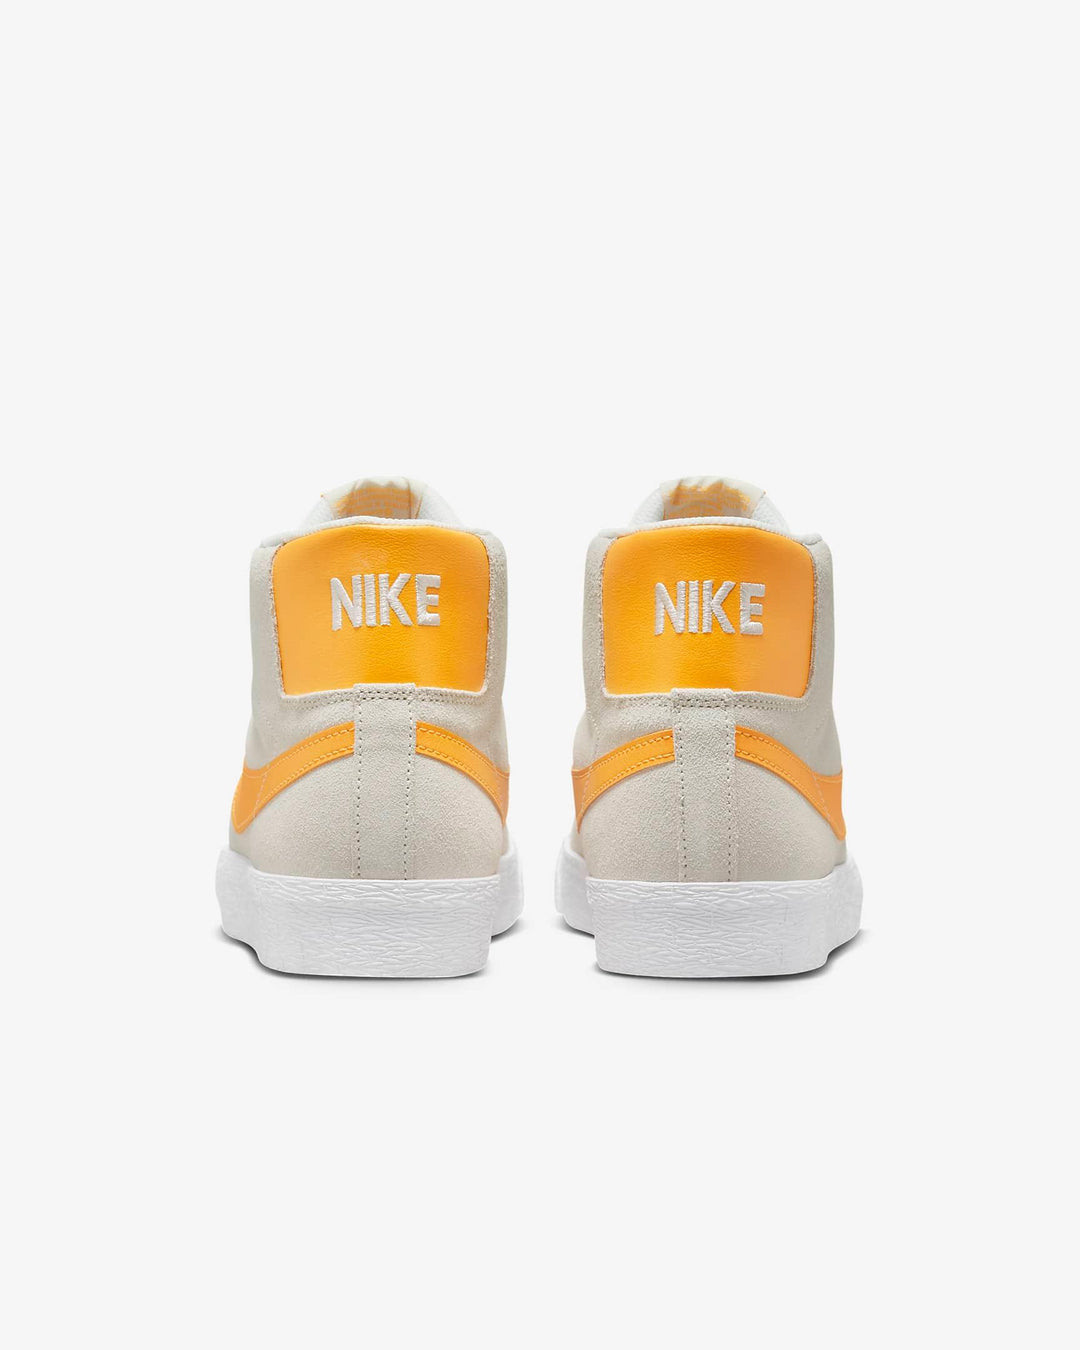 Giày Nike SB Zoom Blazer Mid Skate Shoes #Laser Orange - Kallos Vietnam